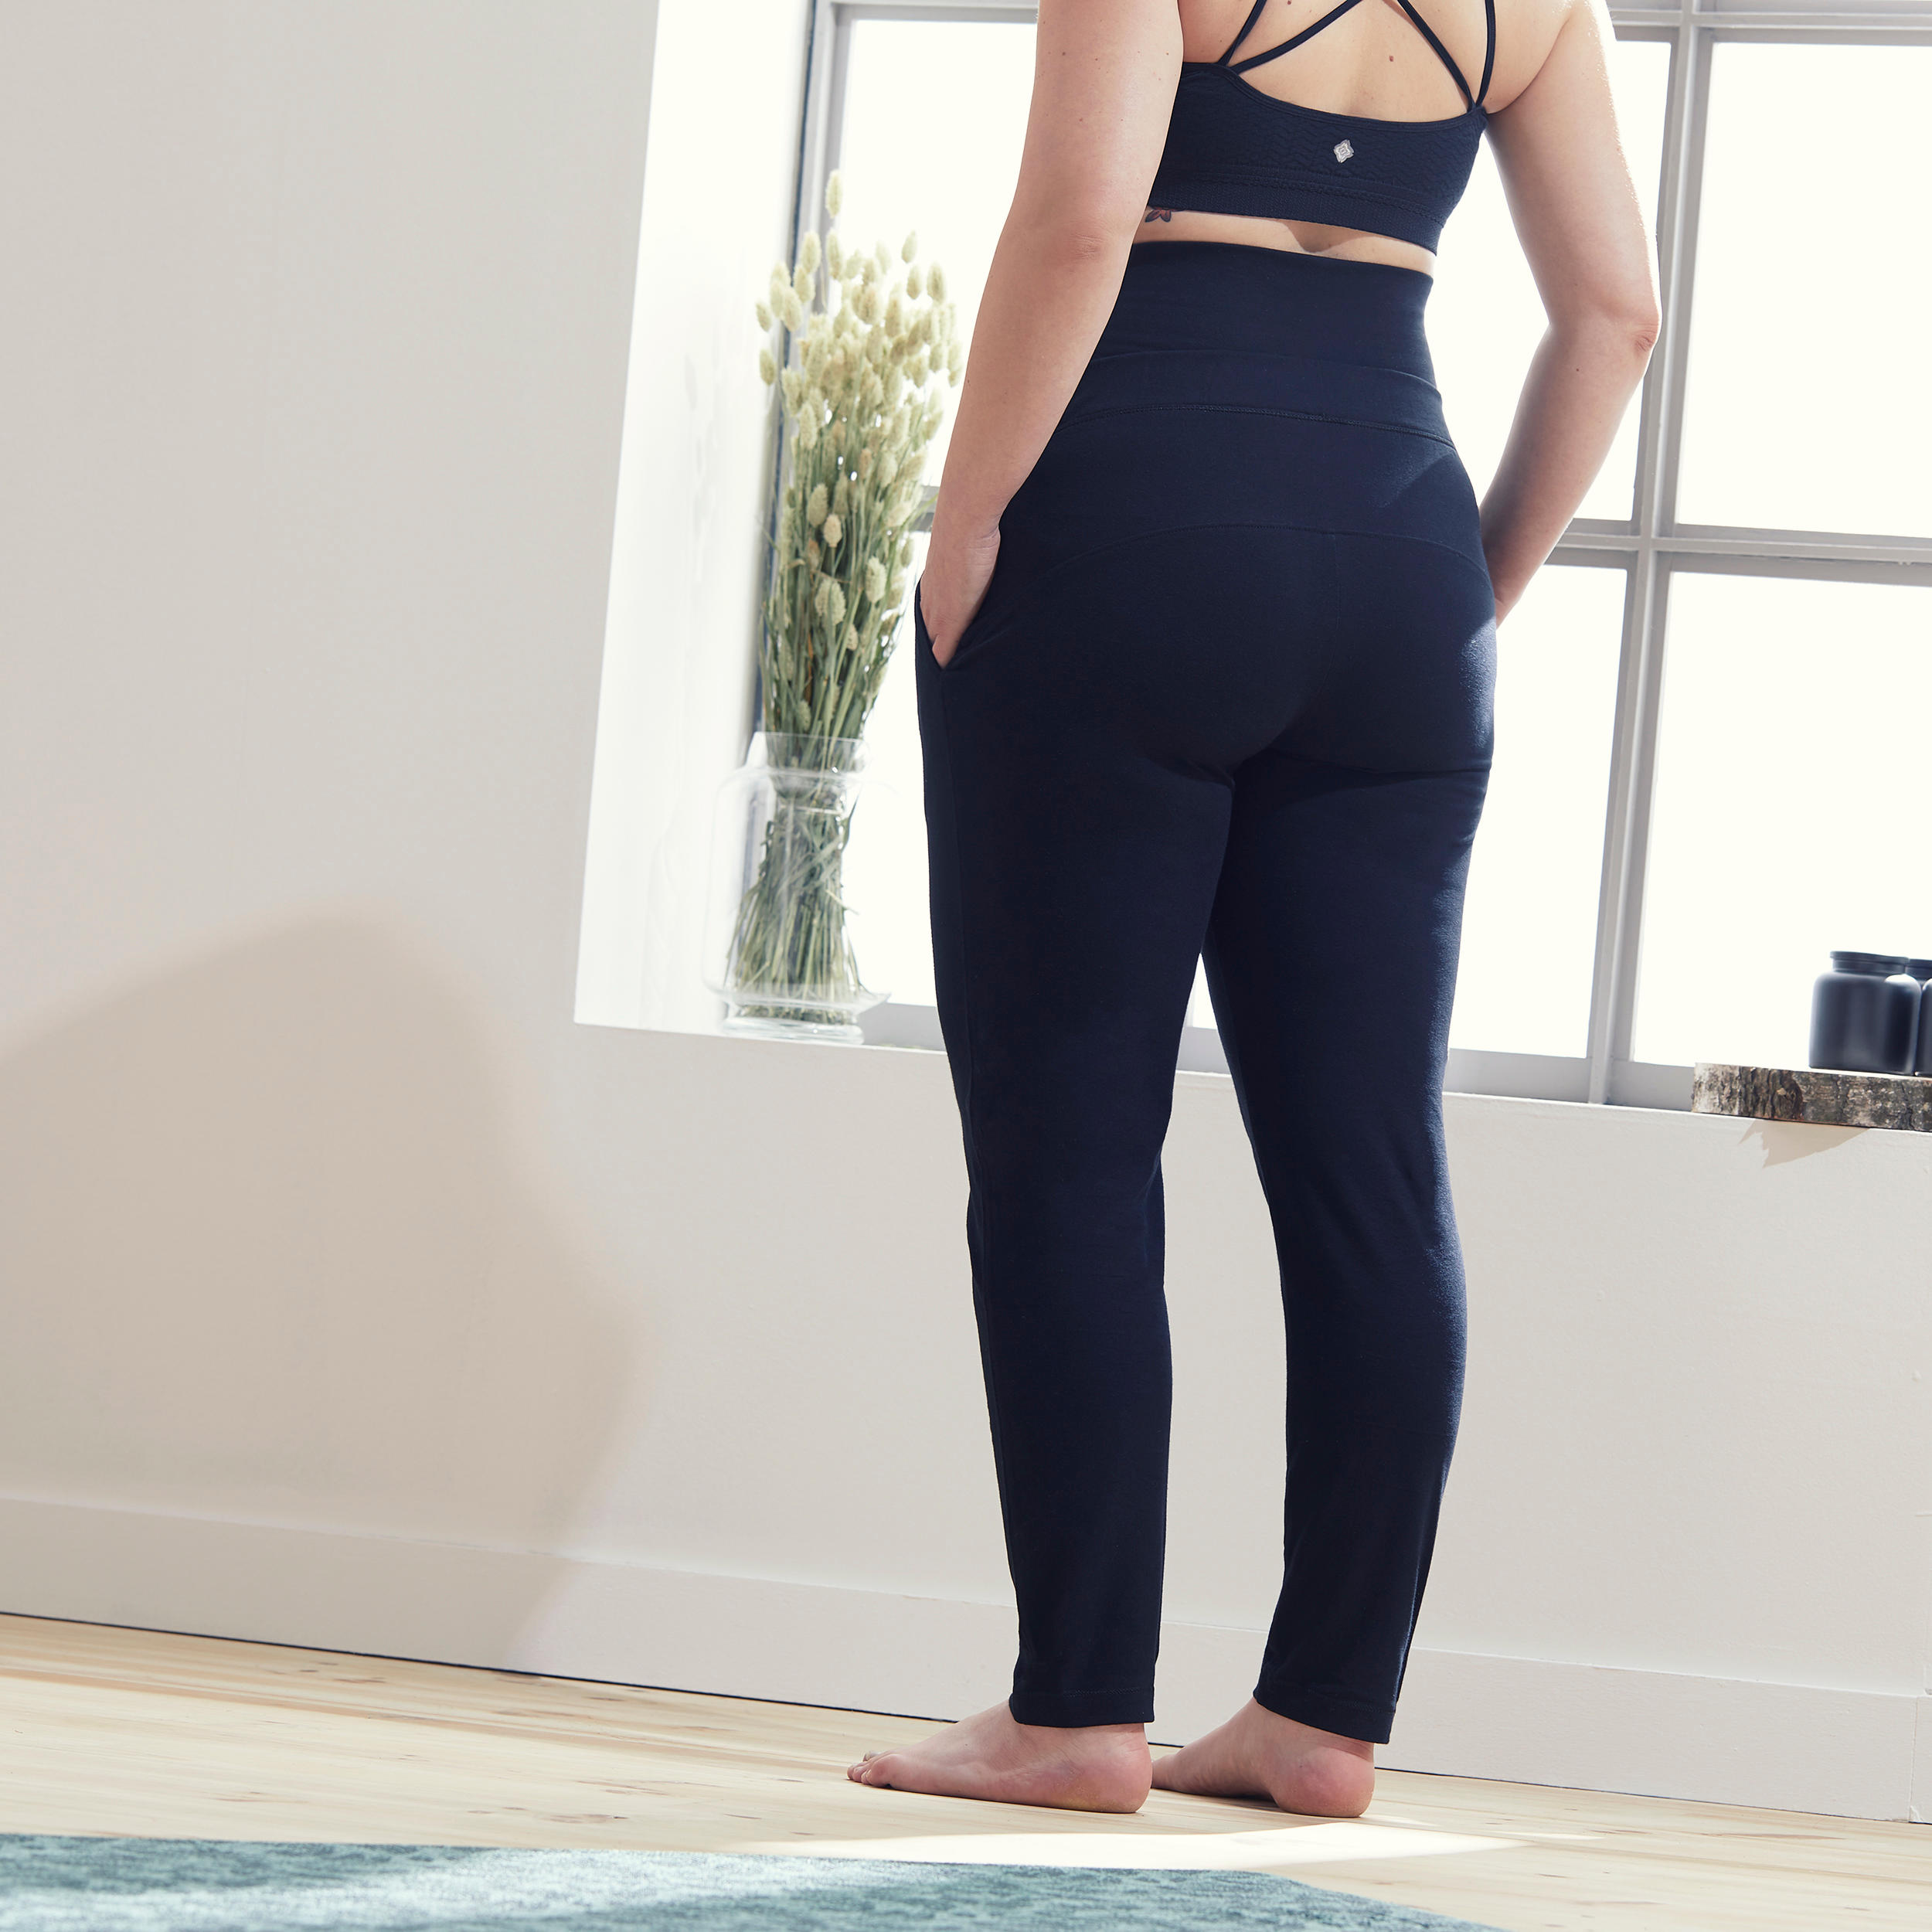 Gentle Yoga Pregnancy Bottoms - Black 5/10